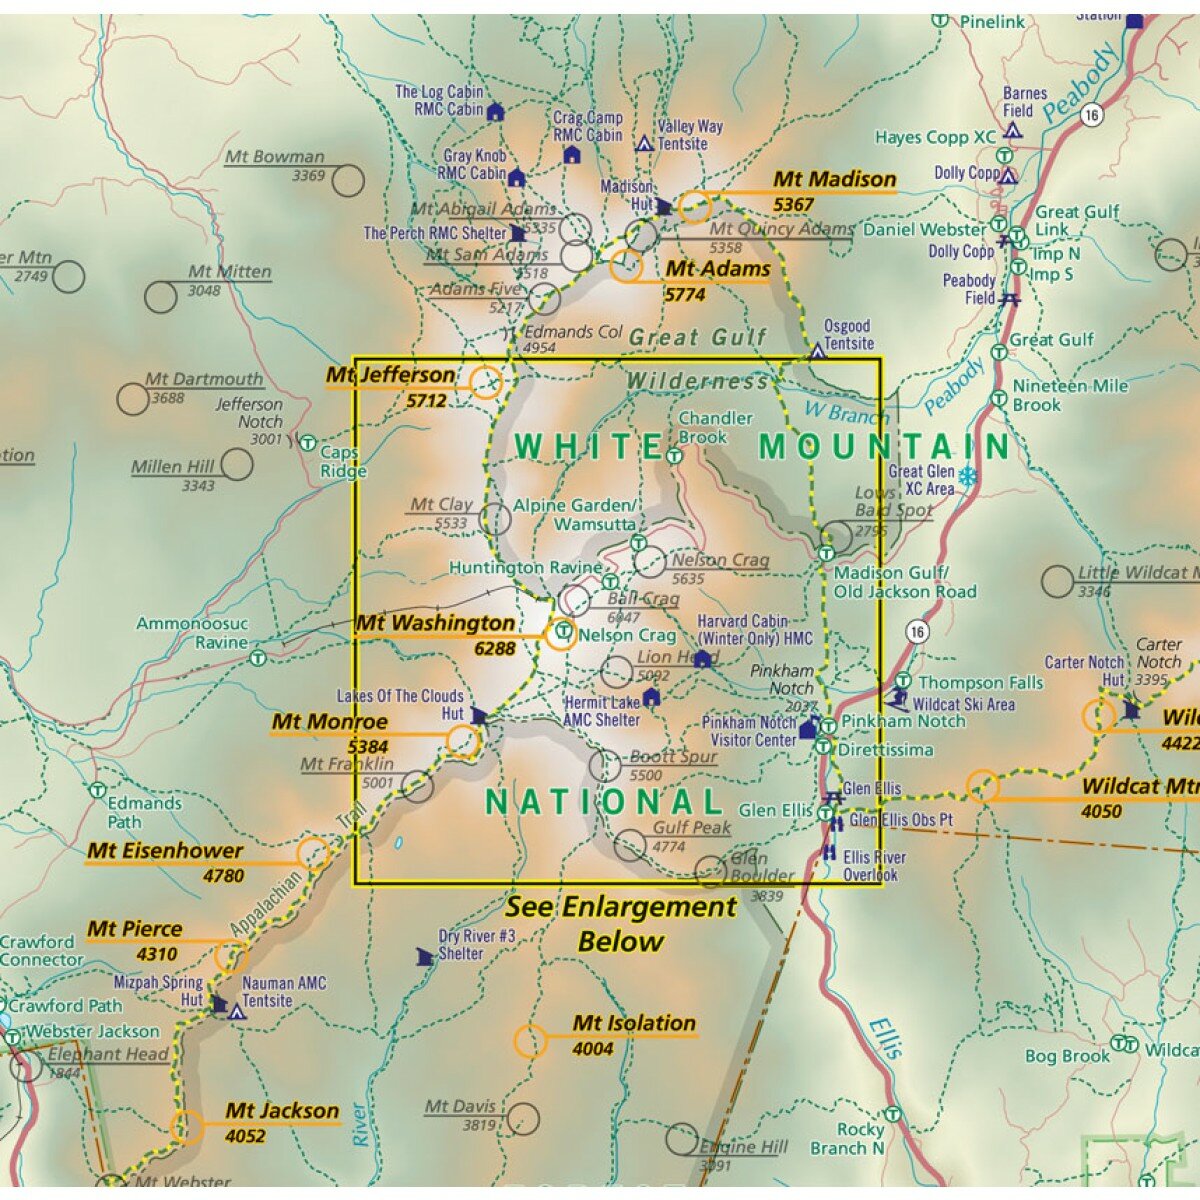 (Map courtesy Appalachian Mountain Club)